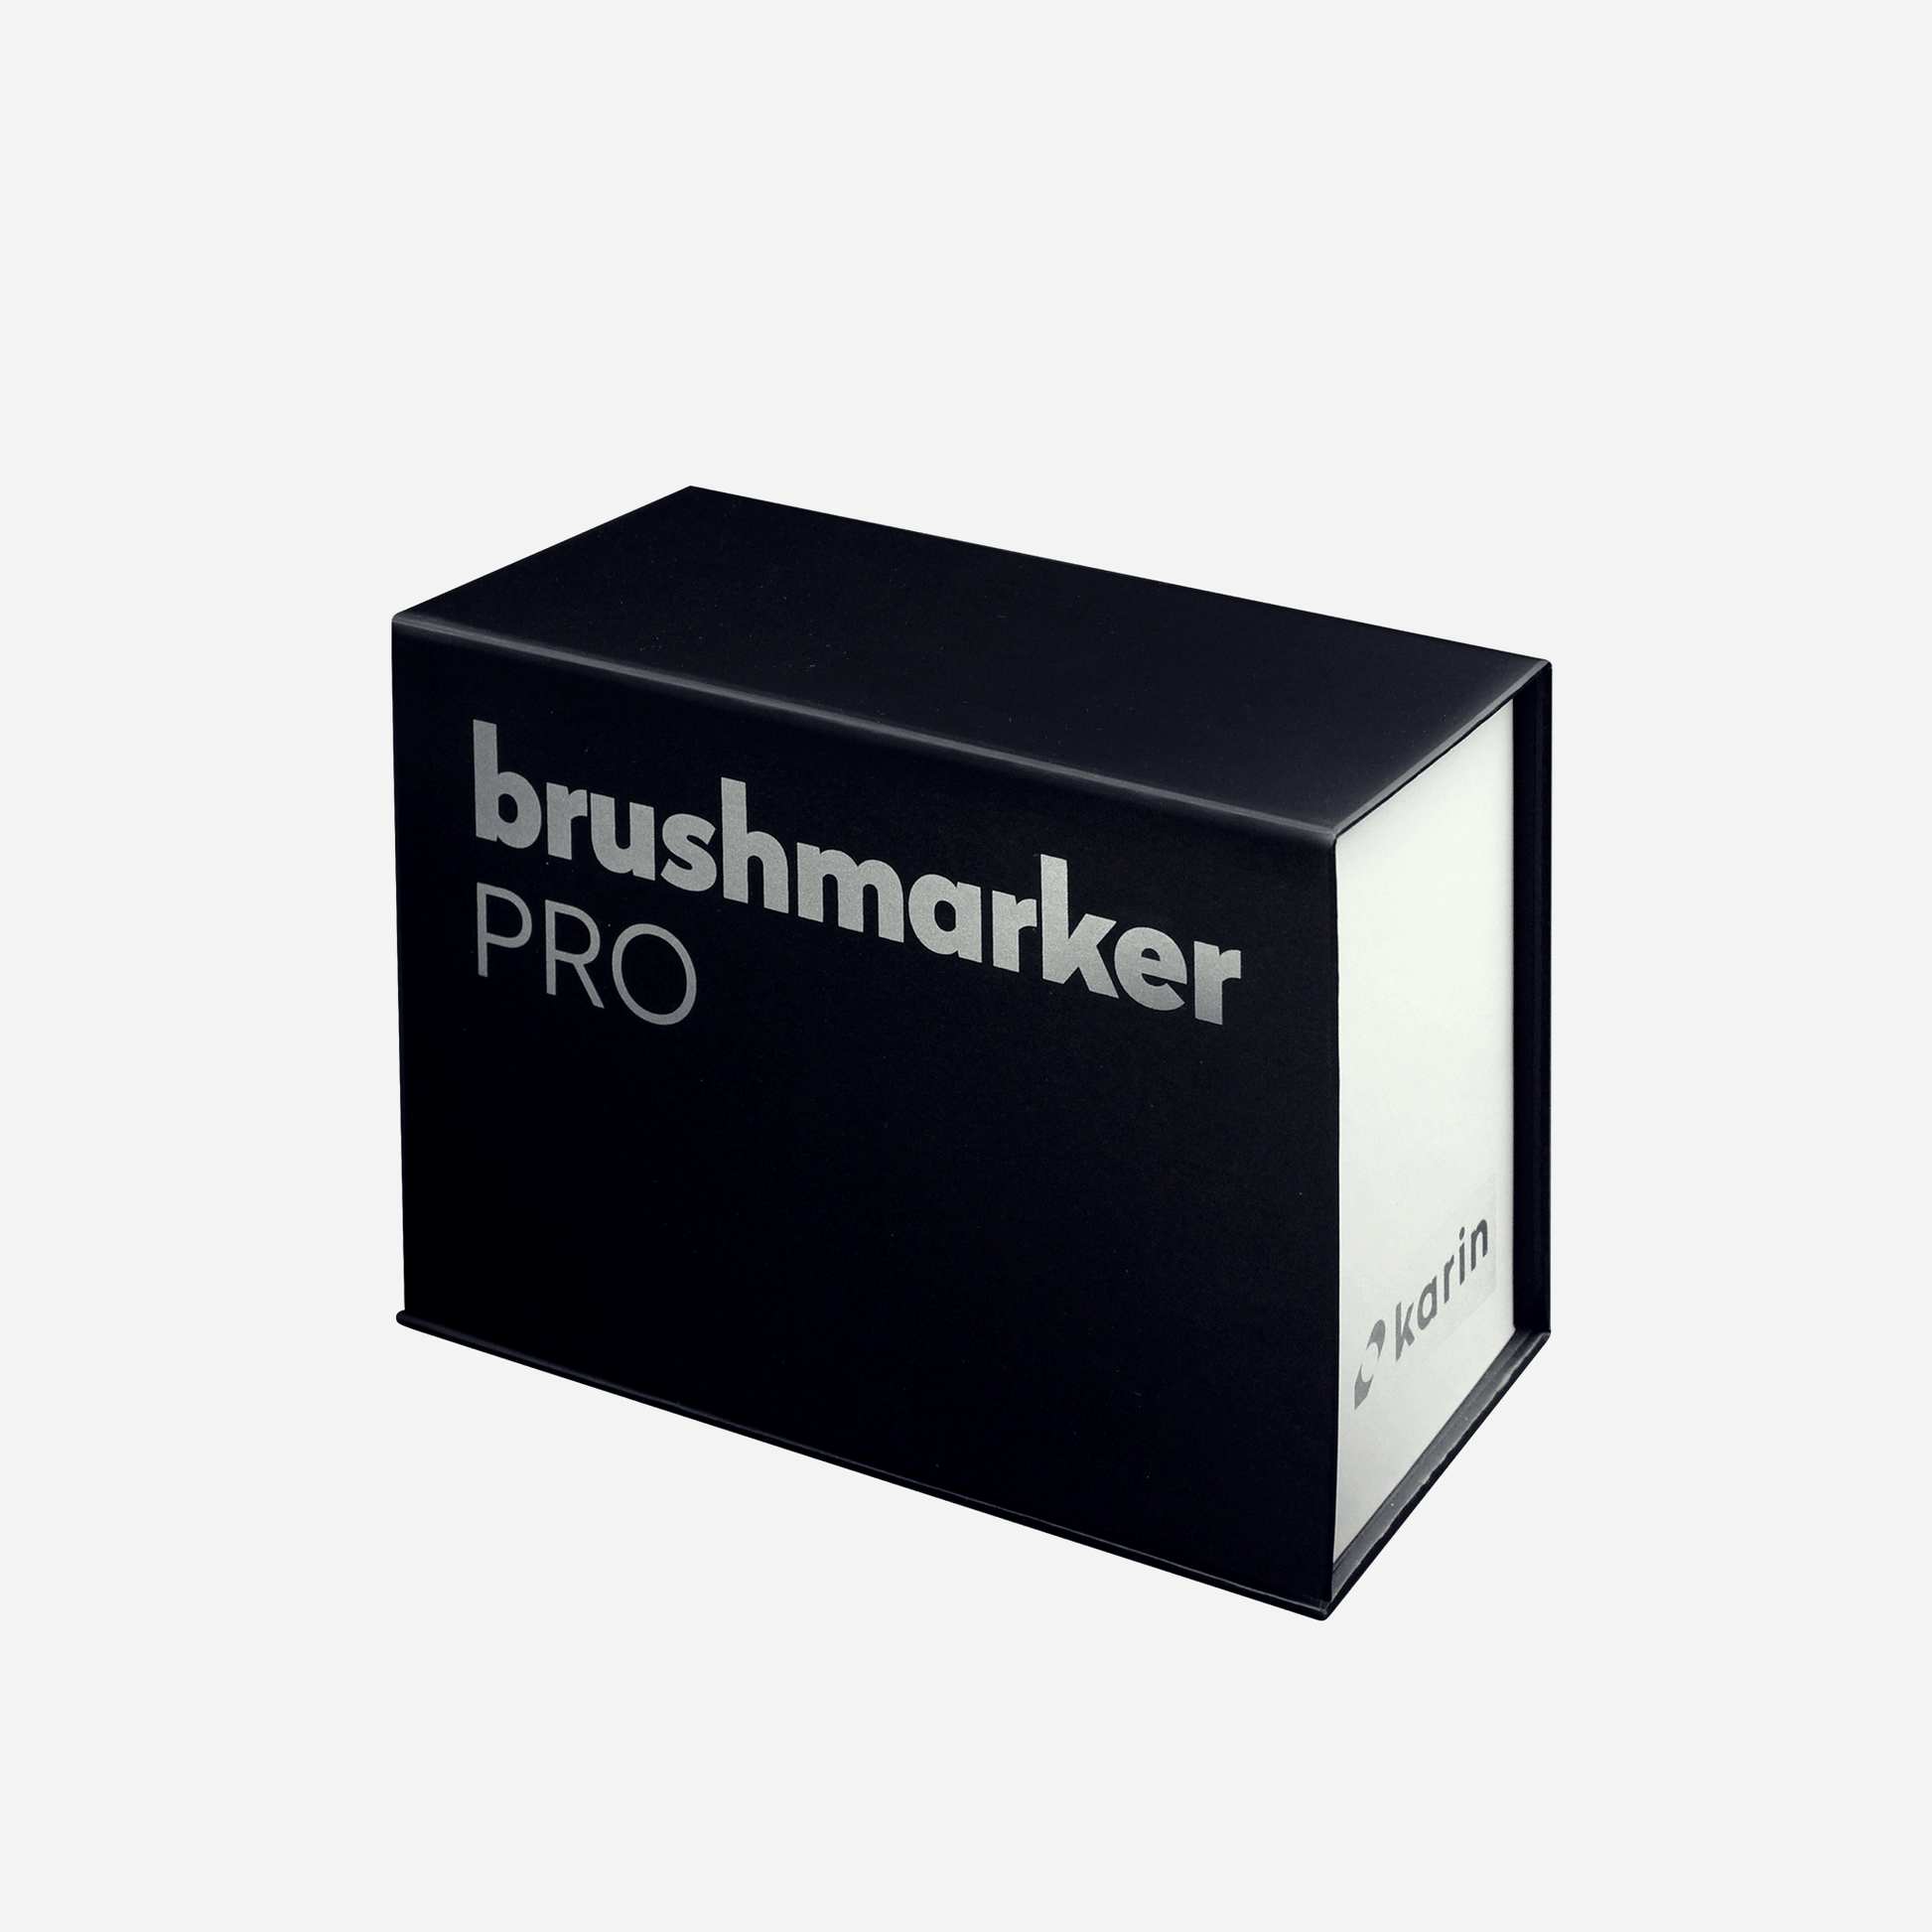 Karin Brushmarker Pro - Black 030